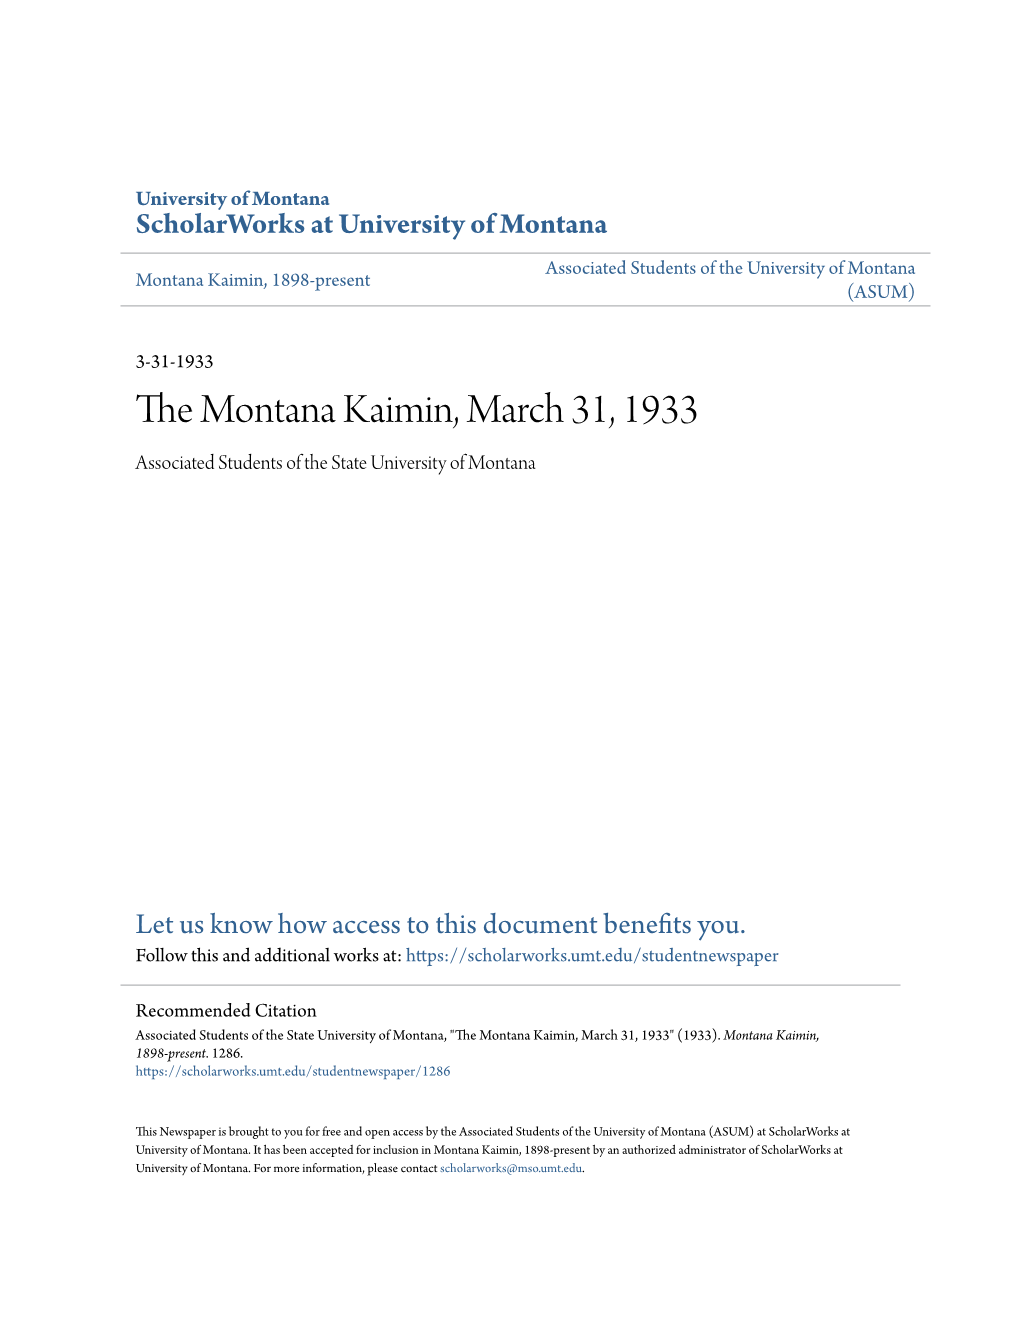 The Montana Kaimin, March 31, 1933